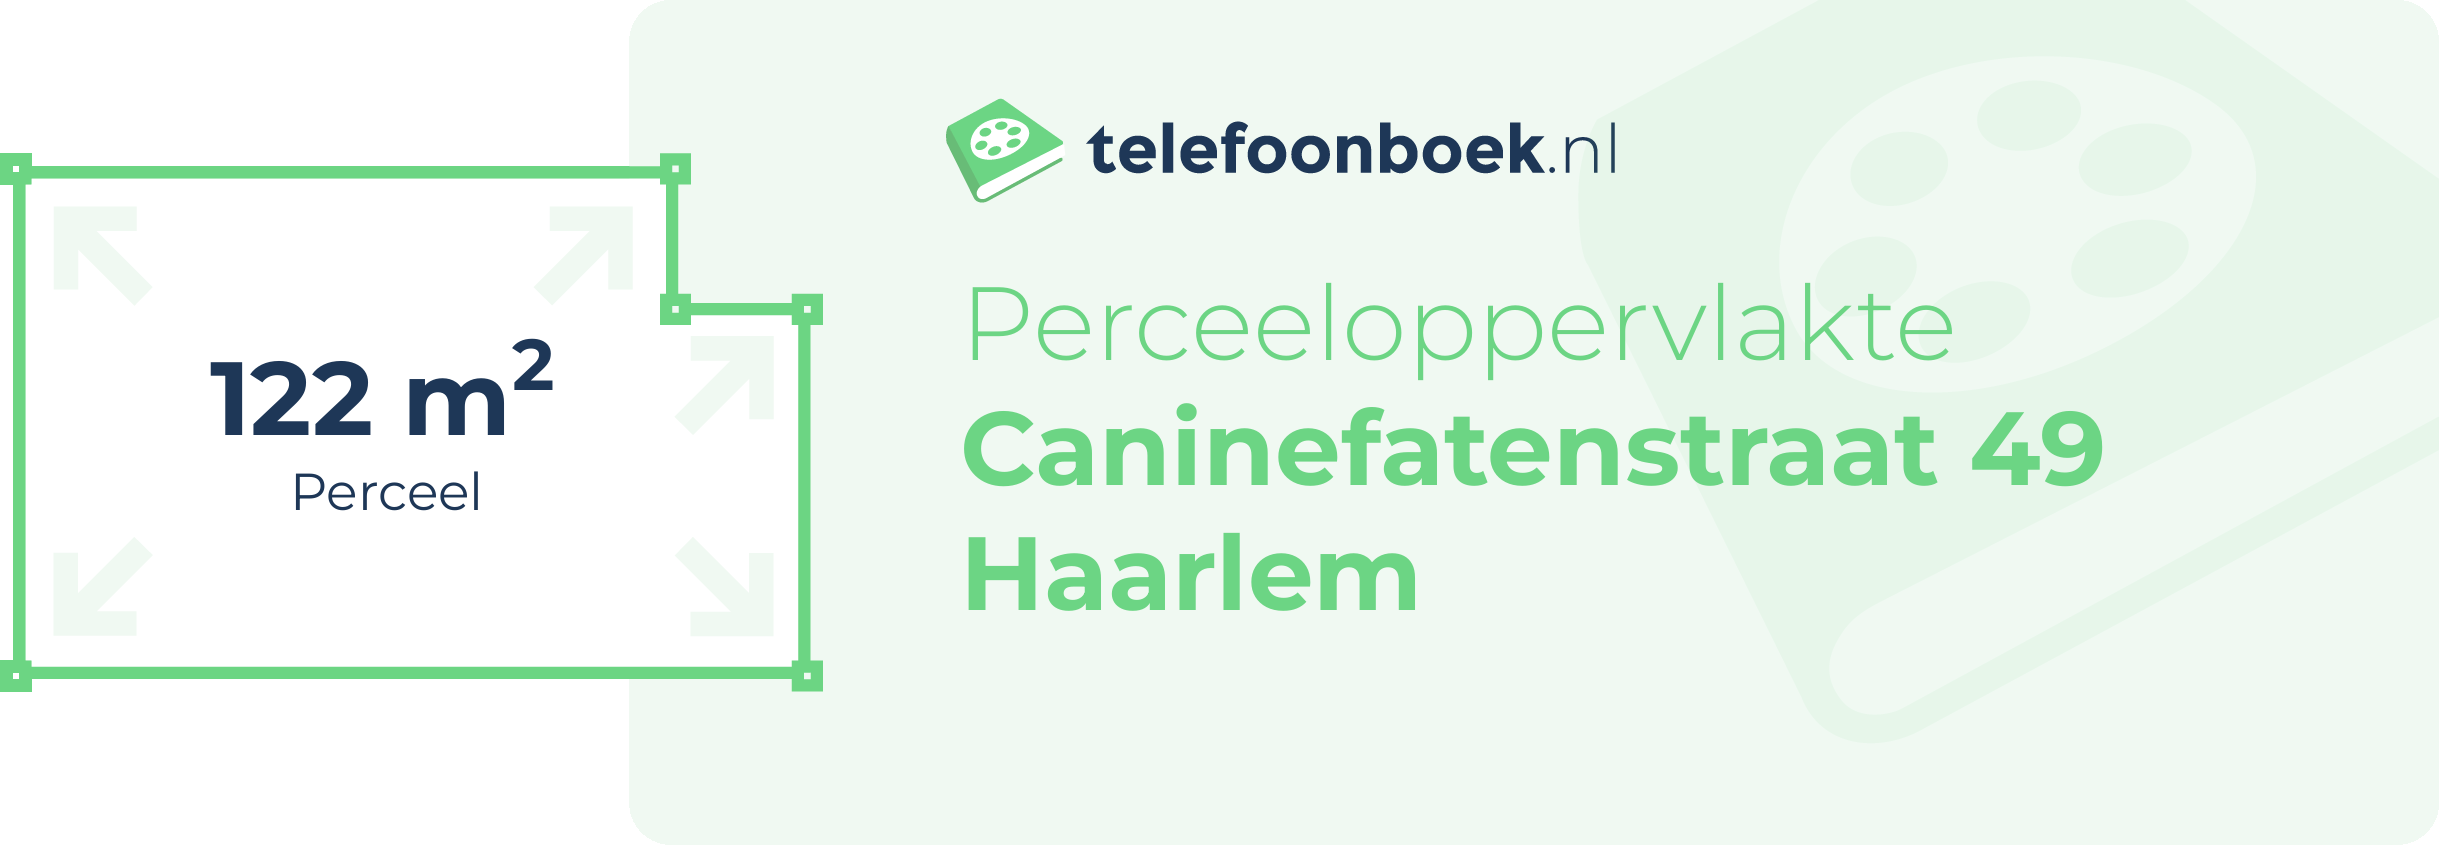 Perceeloppervlakte Caninefatenstraat 49 Haarlem